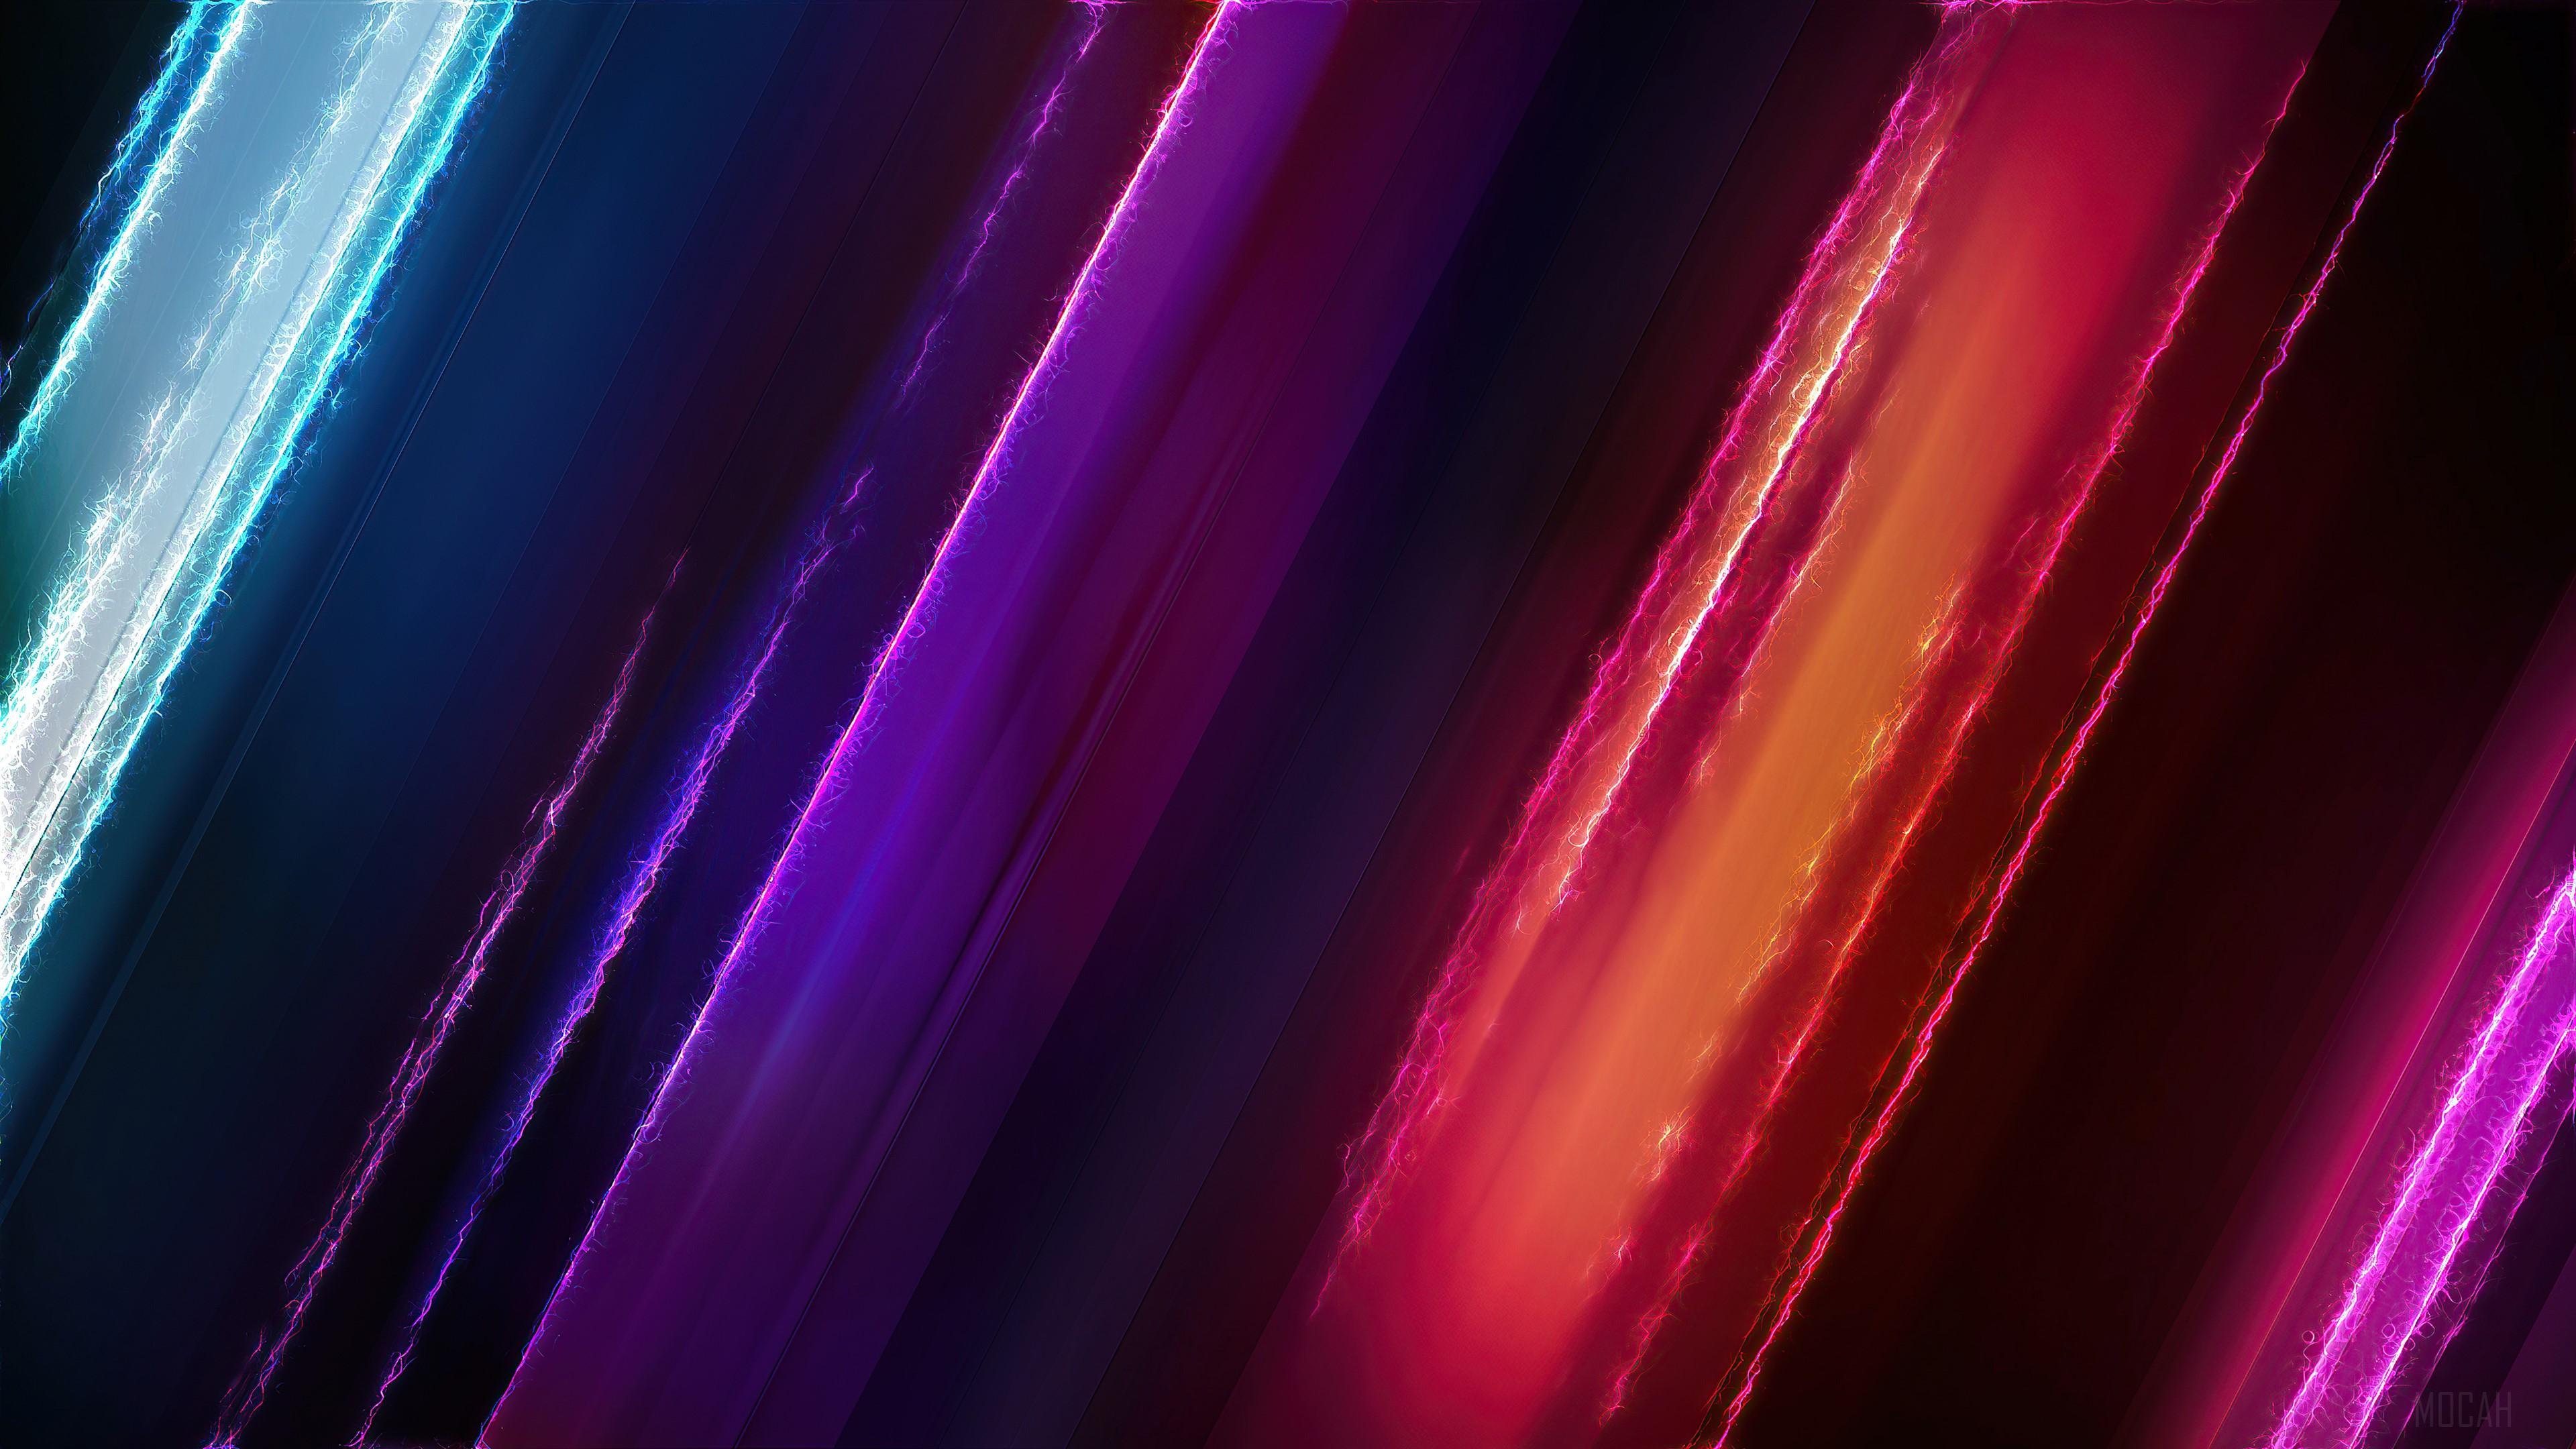 HD wallpaper, Abstract Colors Burning 4K